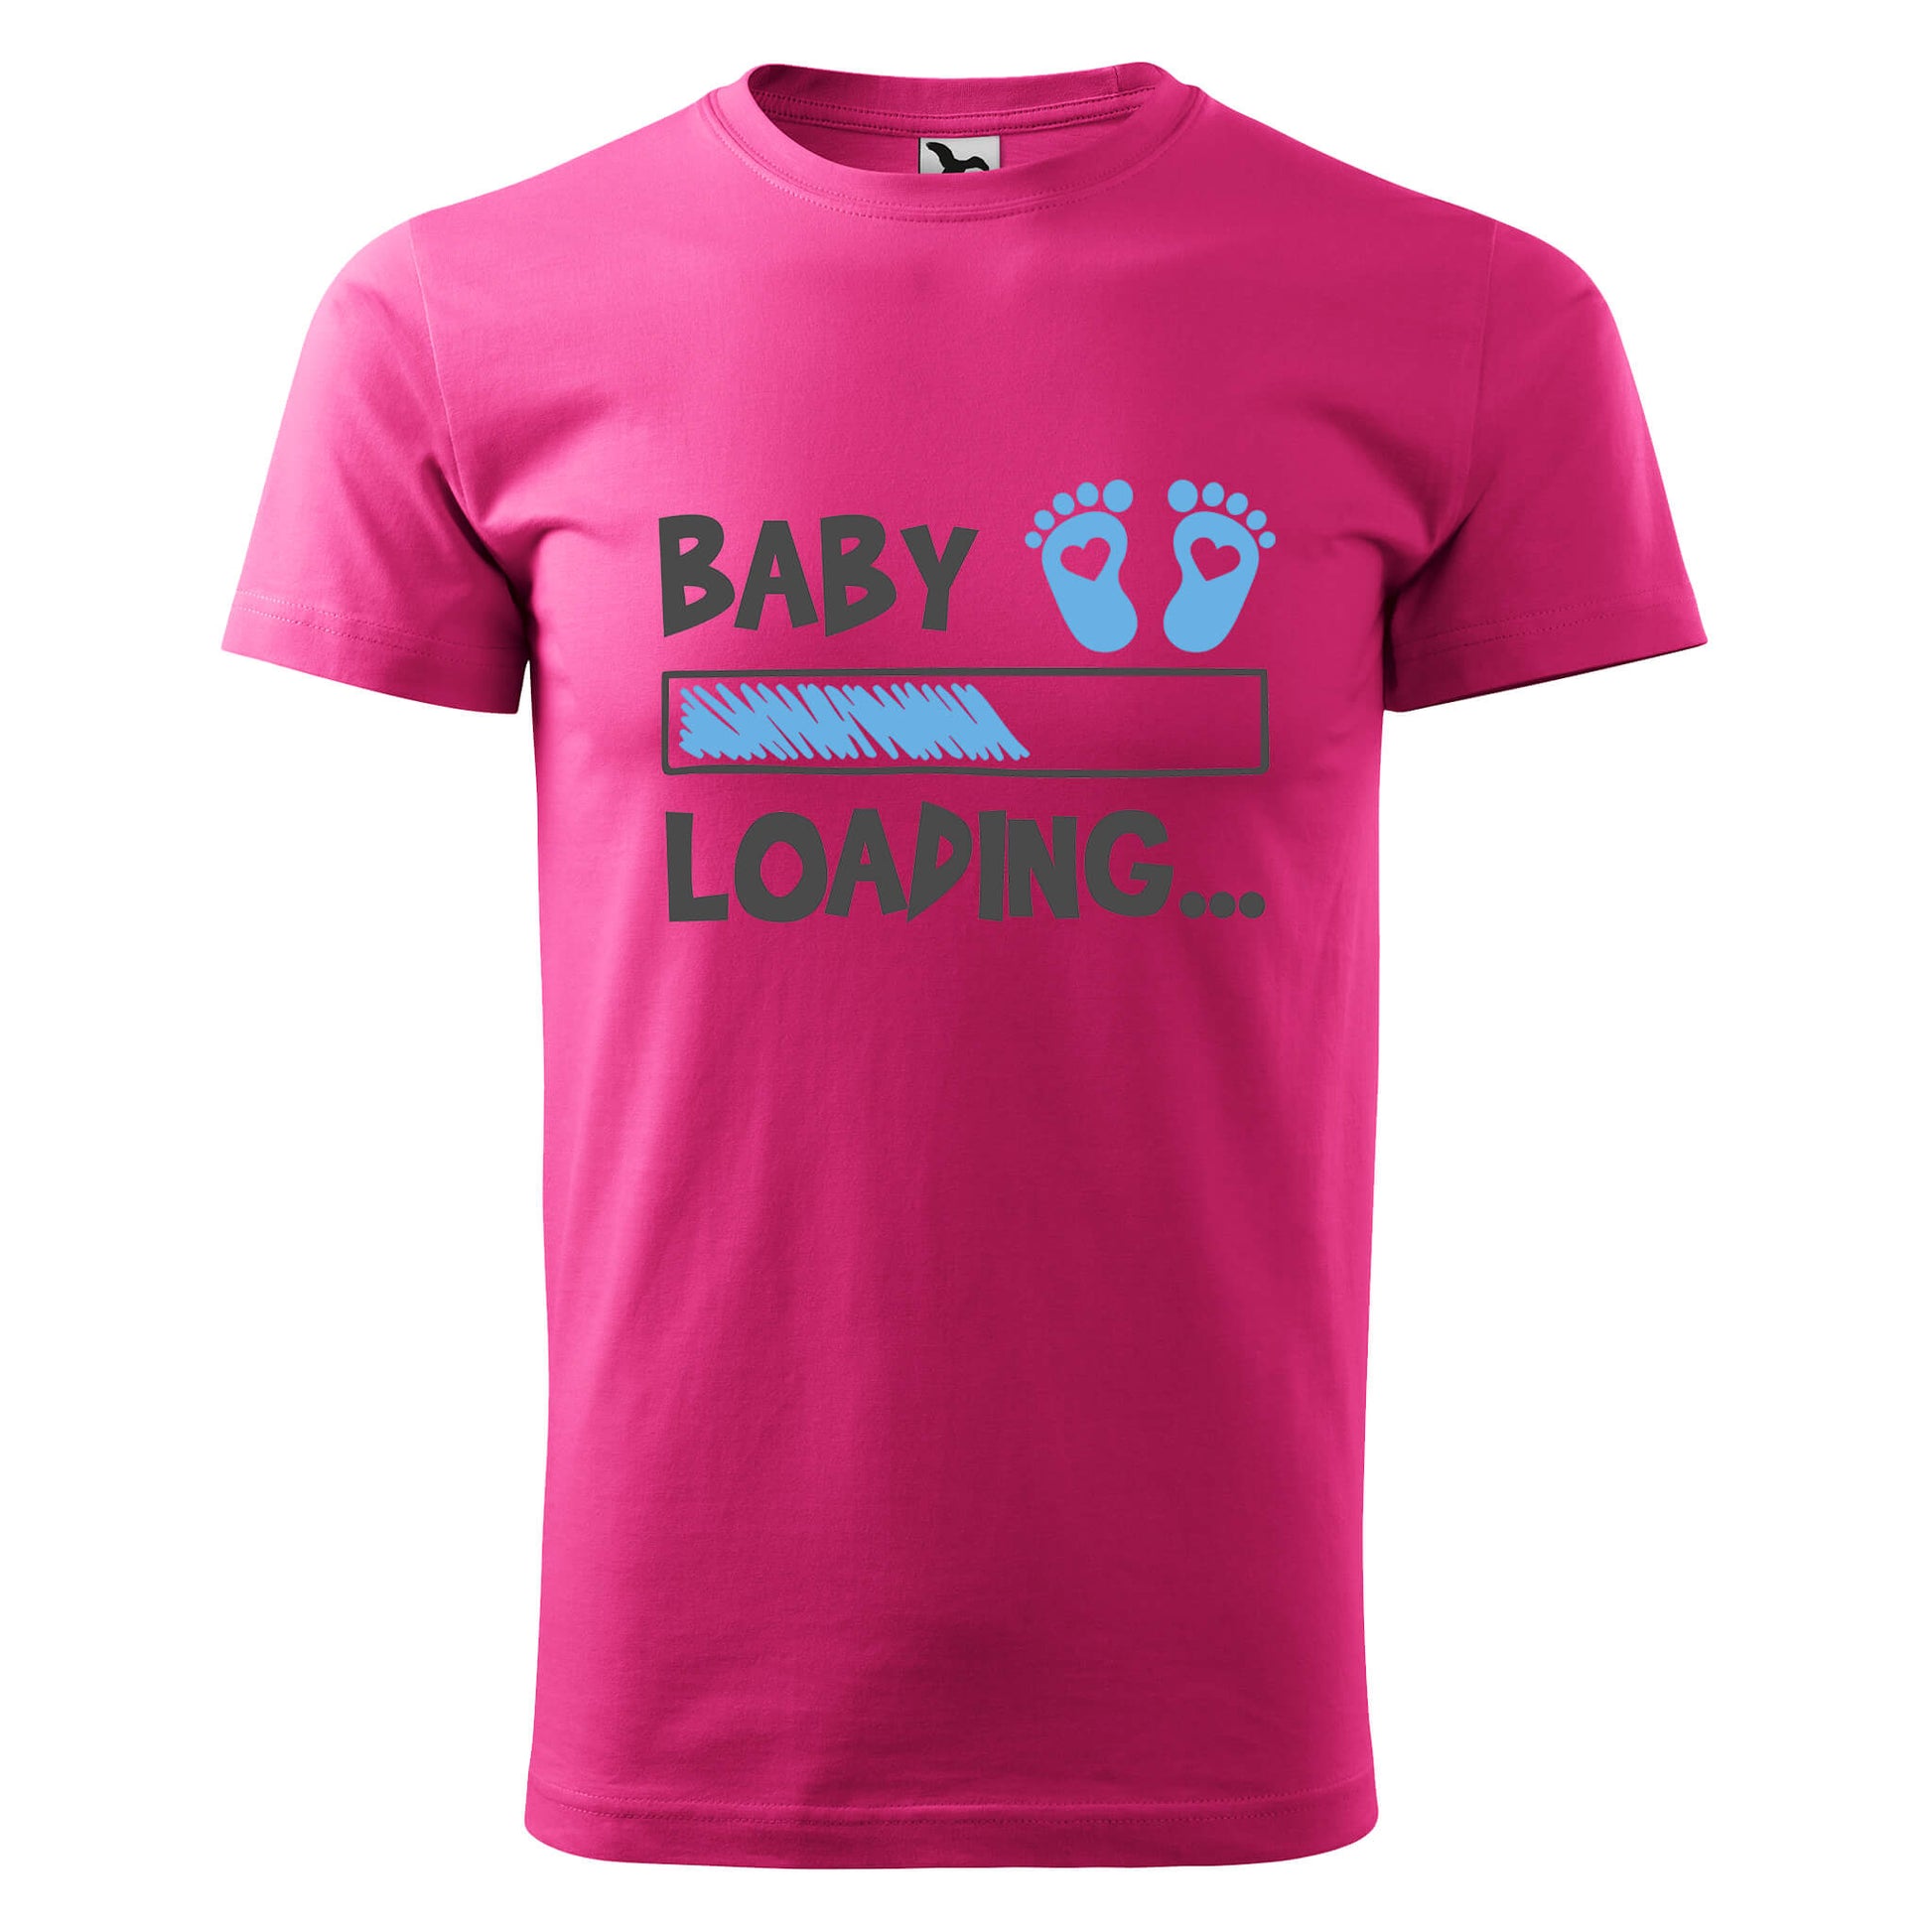 Babyboy loading t-shirt - rvdesignprint